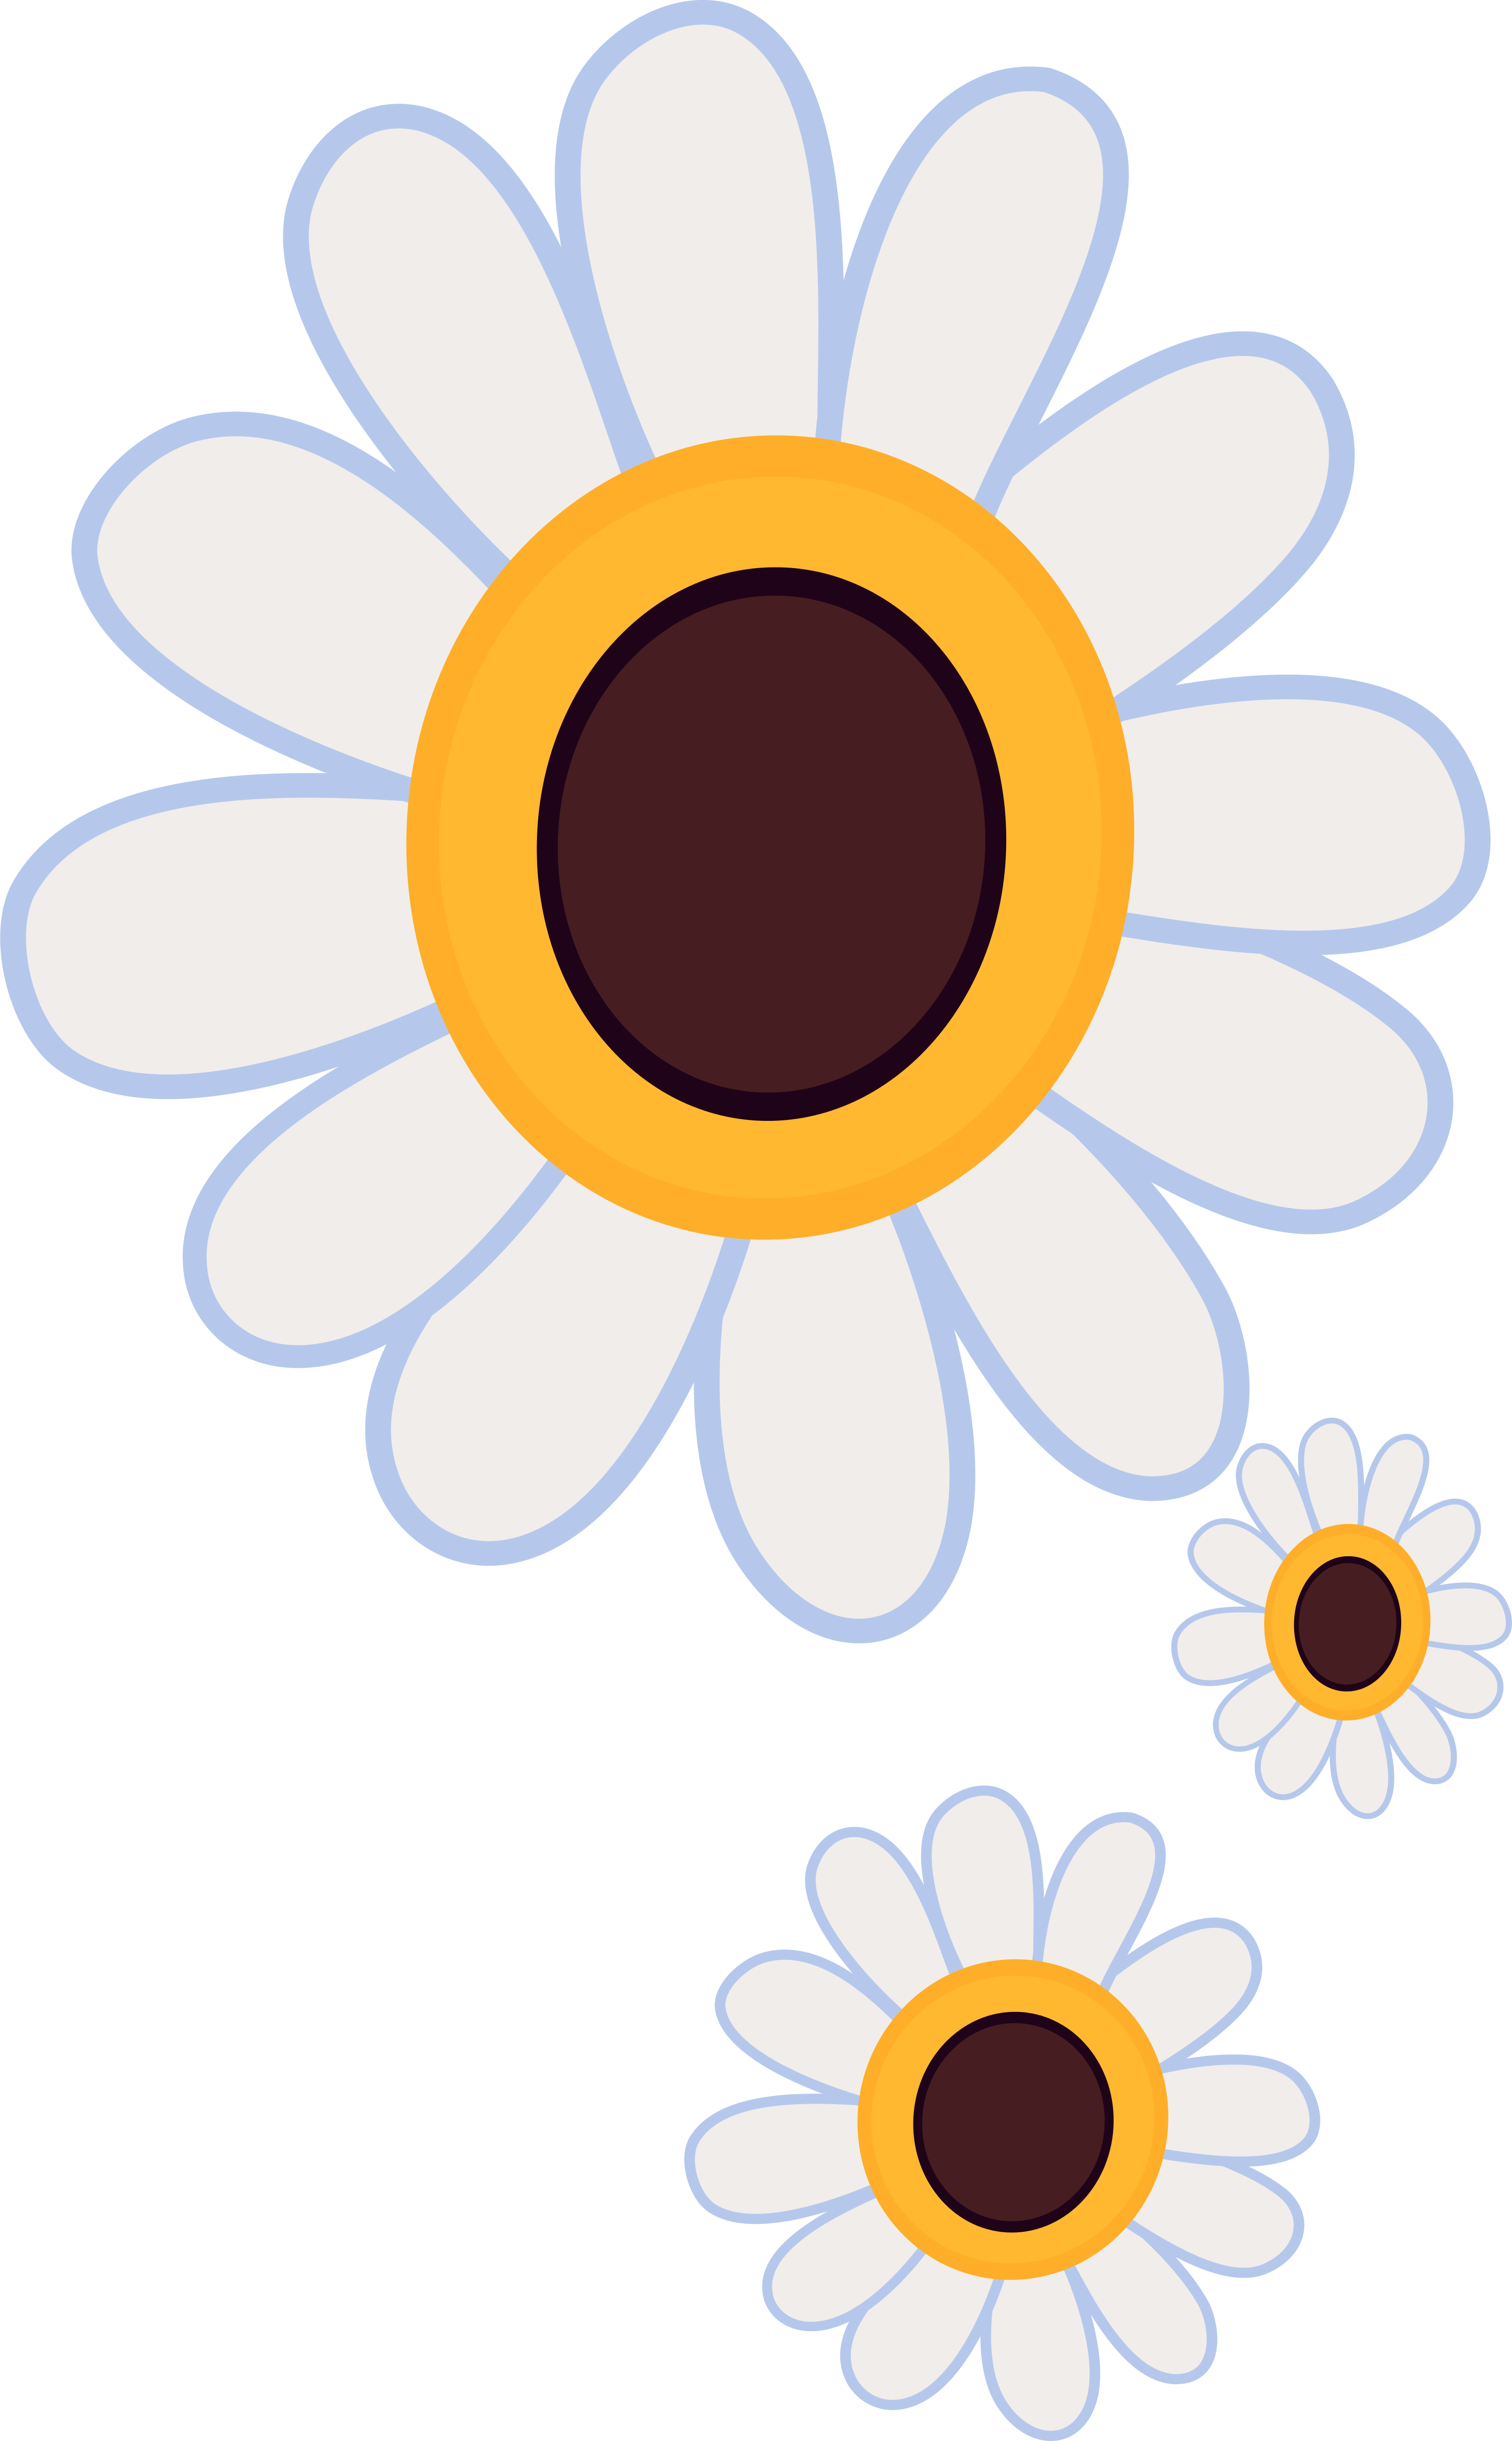 Gloriosa daisy cutie mark by shafty817-daiuv34.png